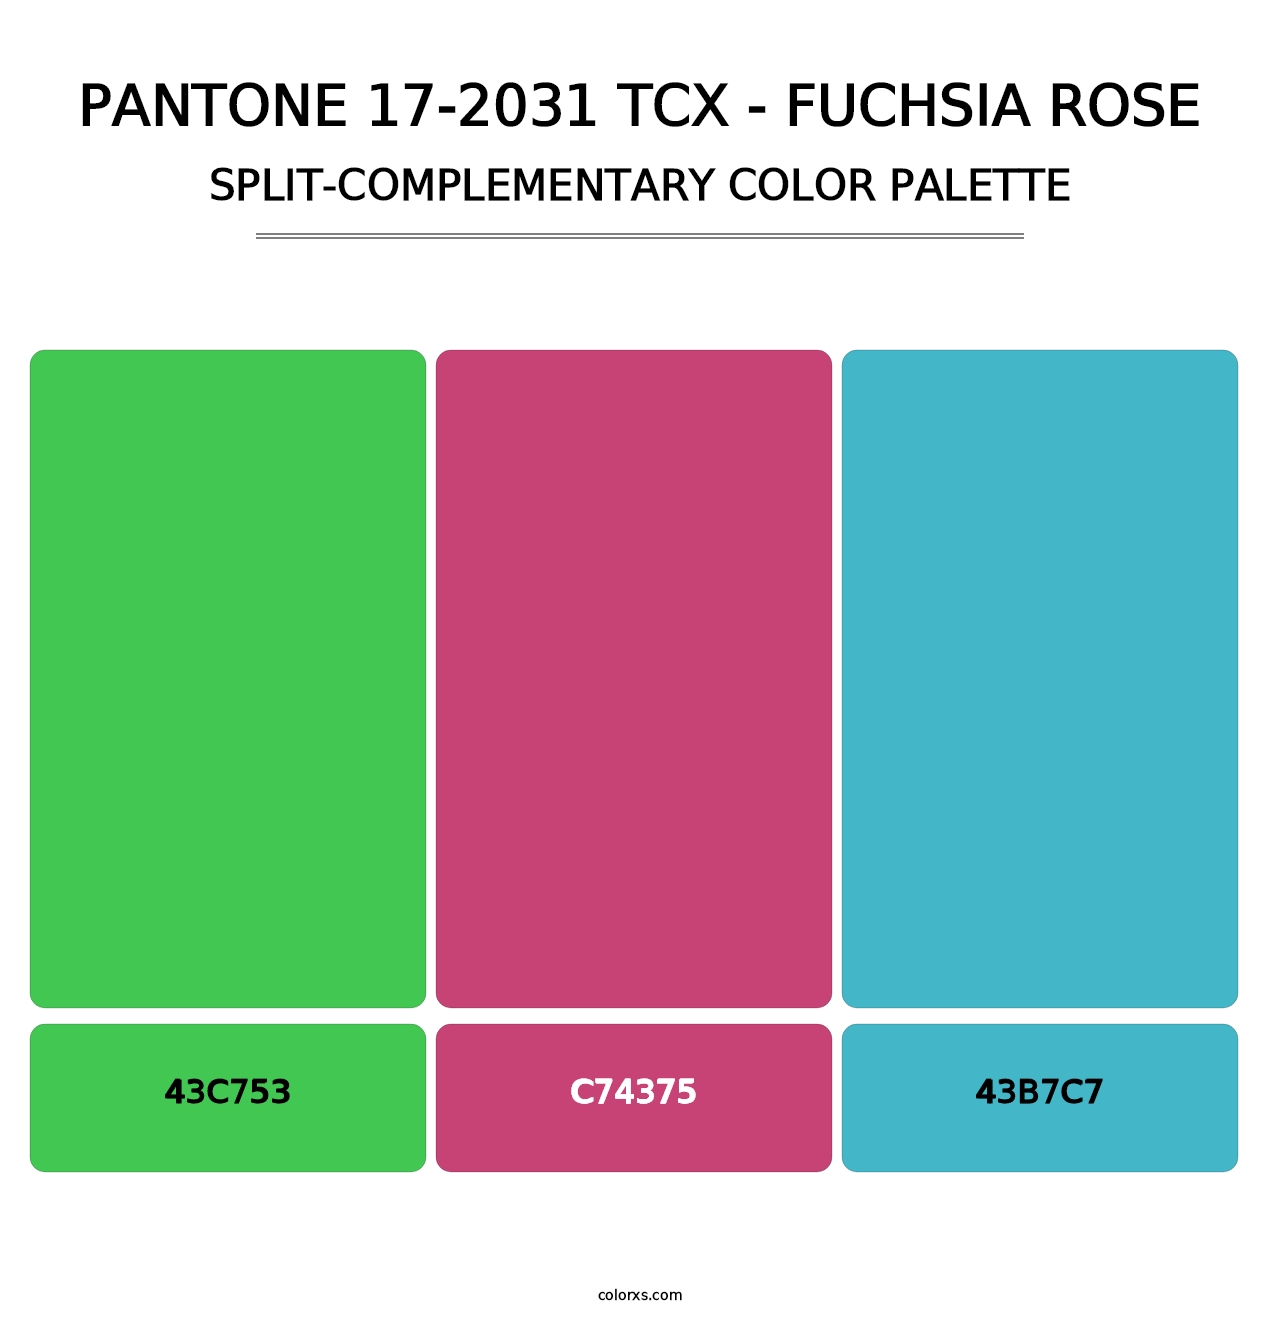 PANTONE 17-2031 TCX - Fuchsia Rose - Split-Complementary Color Palette